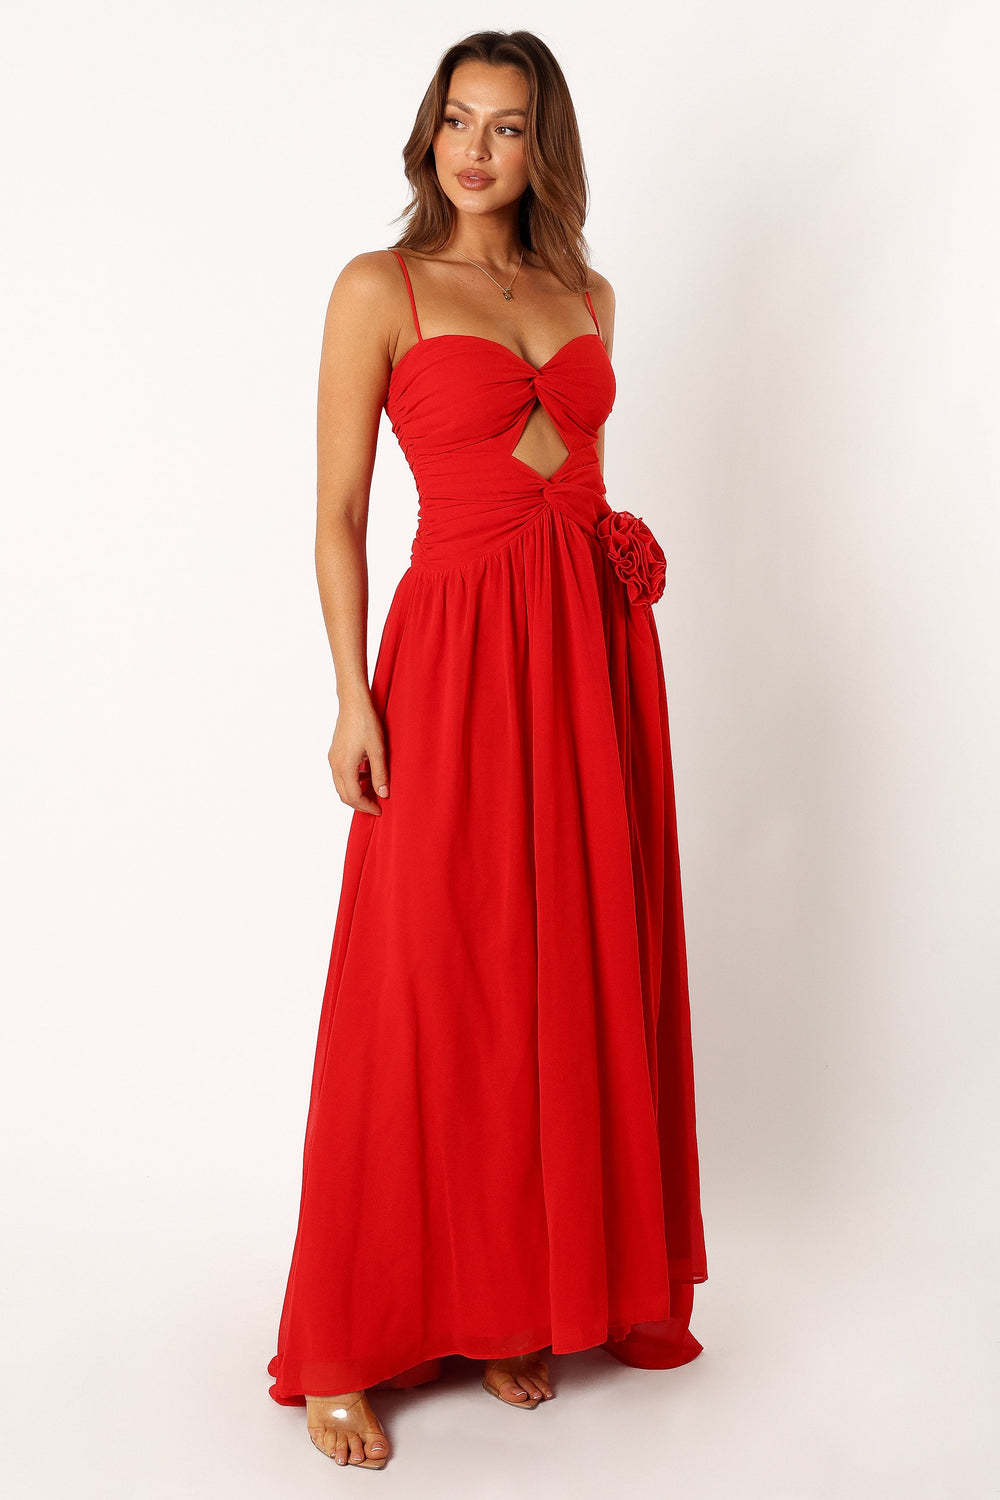 Shop Formal Dress - Danika Maxi Dress - Red fourth image